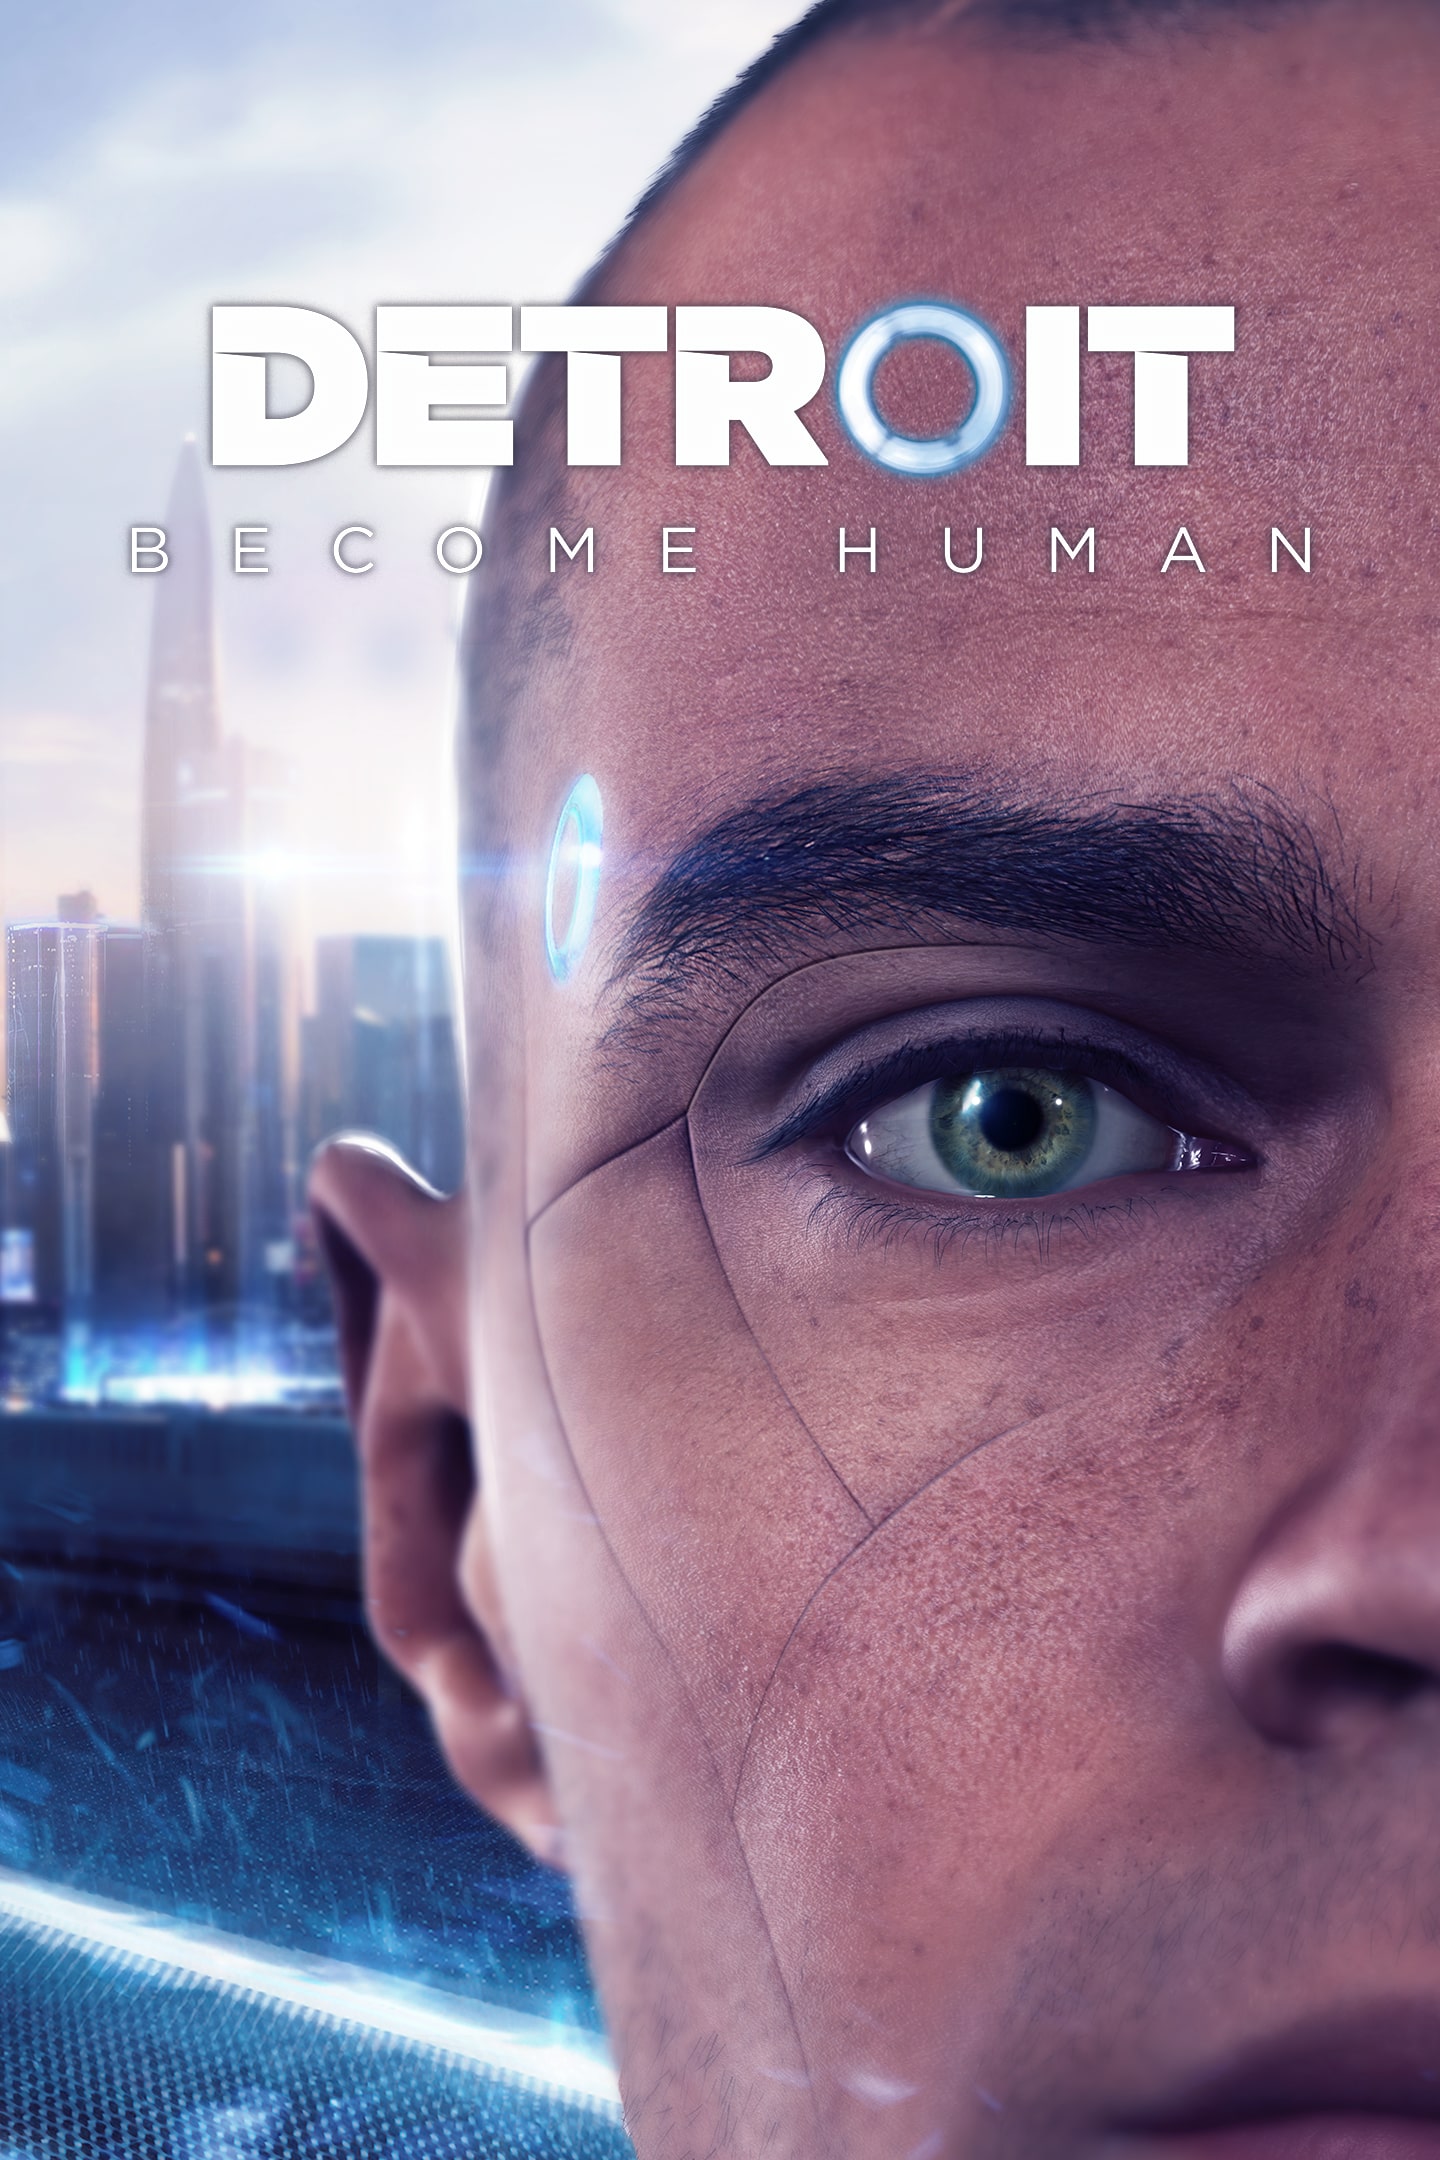 Detroit Become Human - PlayStation 4, PlayStation 4